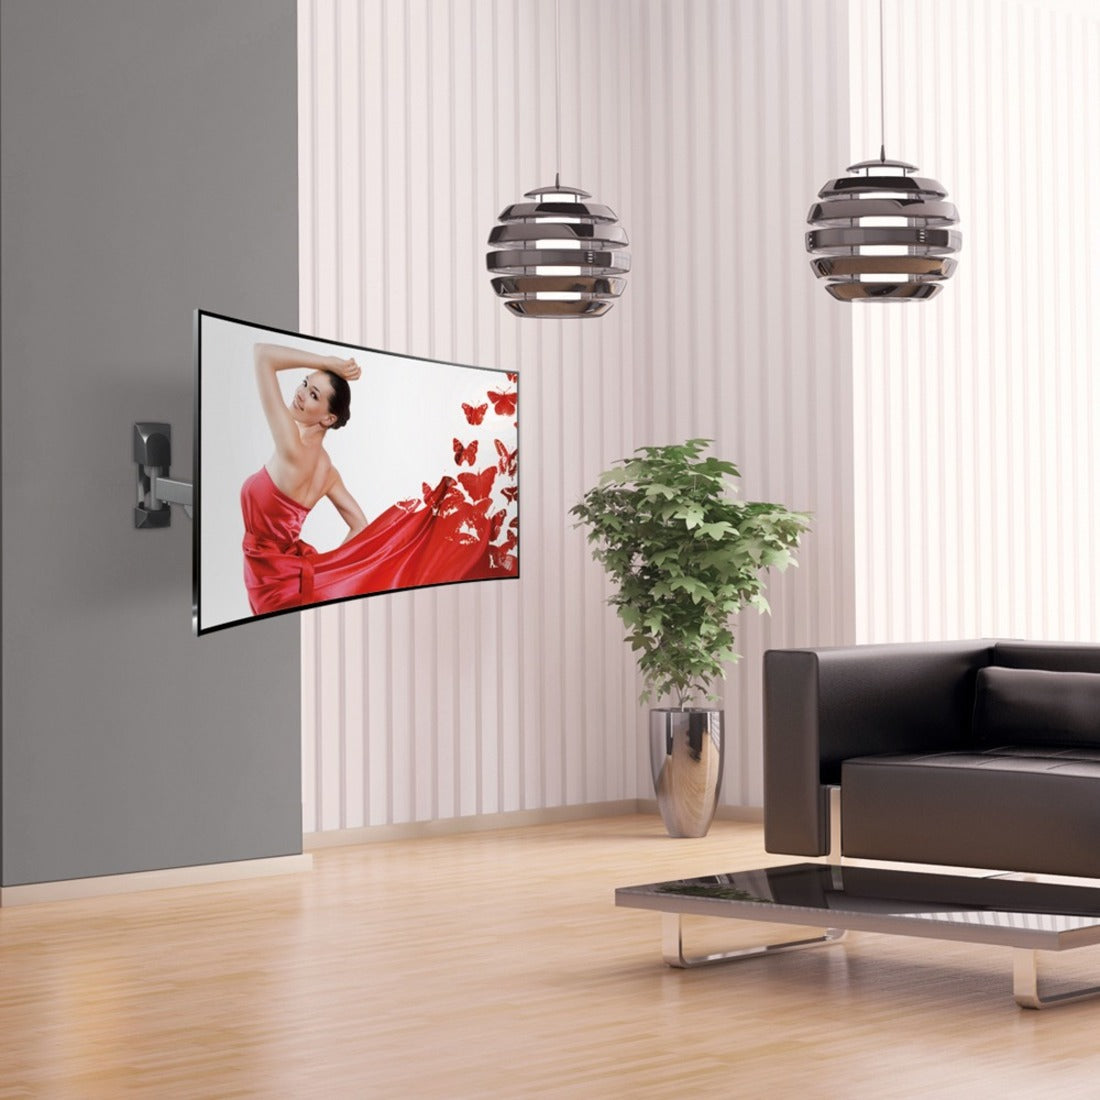 Barkan 3300.B Full-Motion Wall Mount for TV - Black, 29-65" screens, 88lbs weight capacity